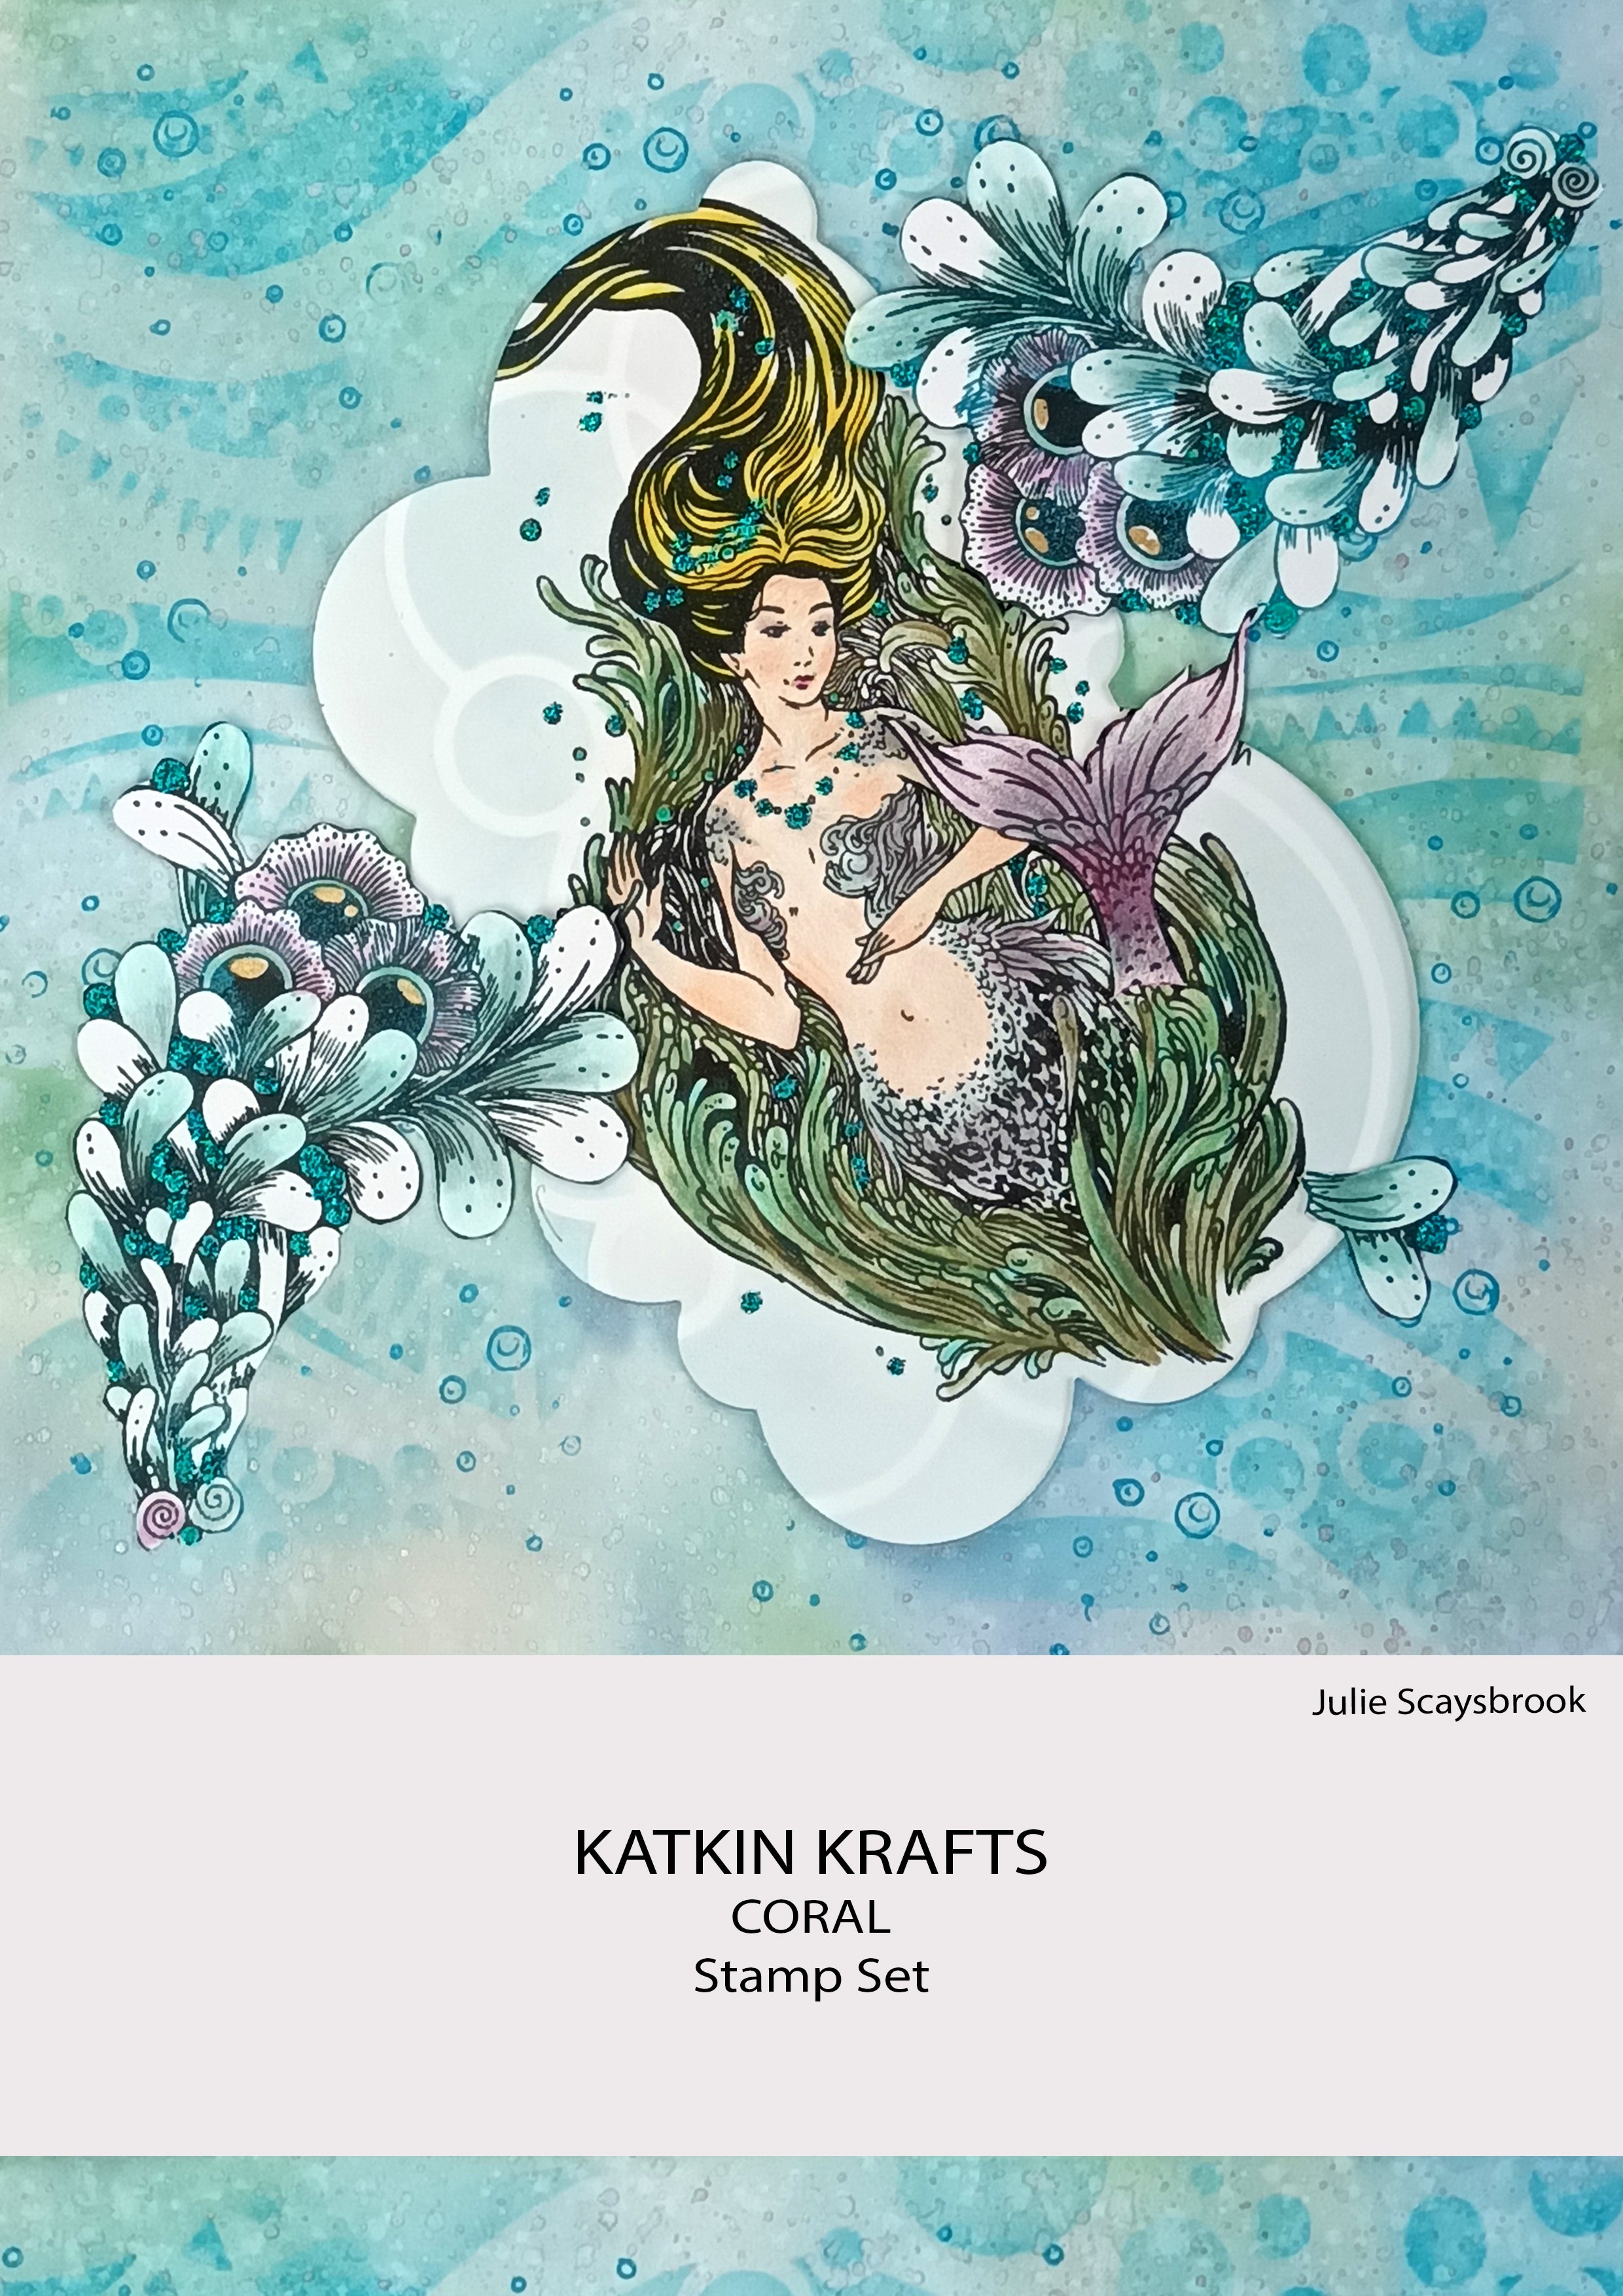 Katkin Krafts Coral 6 in x 8 in Clear Stamp Set